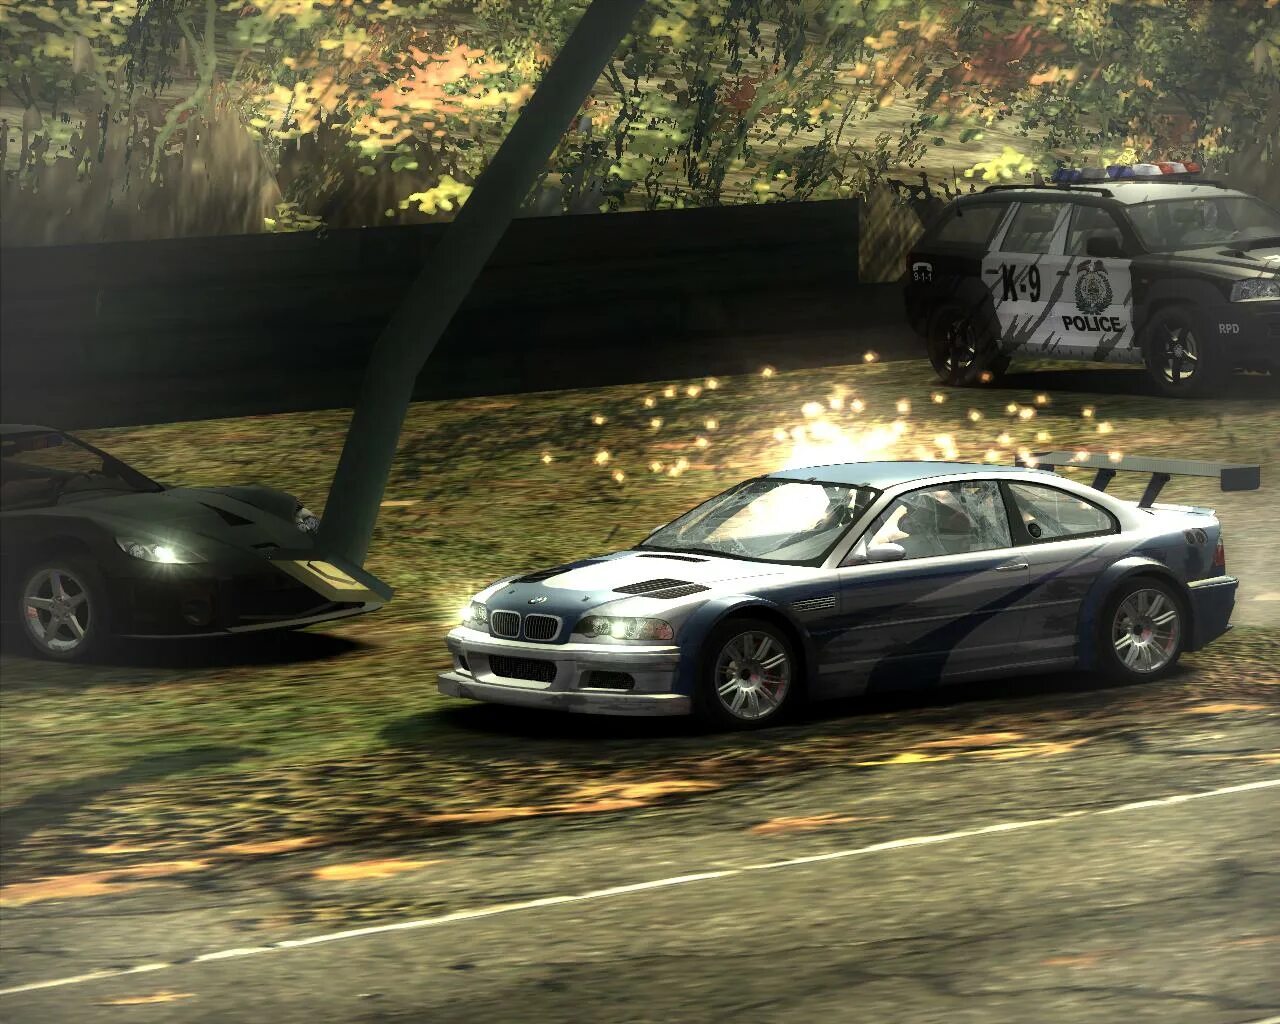 Нид фор СПИД мост вантед Xbox 360. Need for Speed most wanted 2005. NFS MW 2005. NFS most wanted 2005 вертолет. Nfs mw 2005 моды